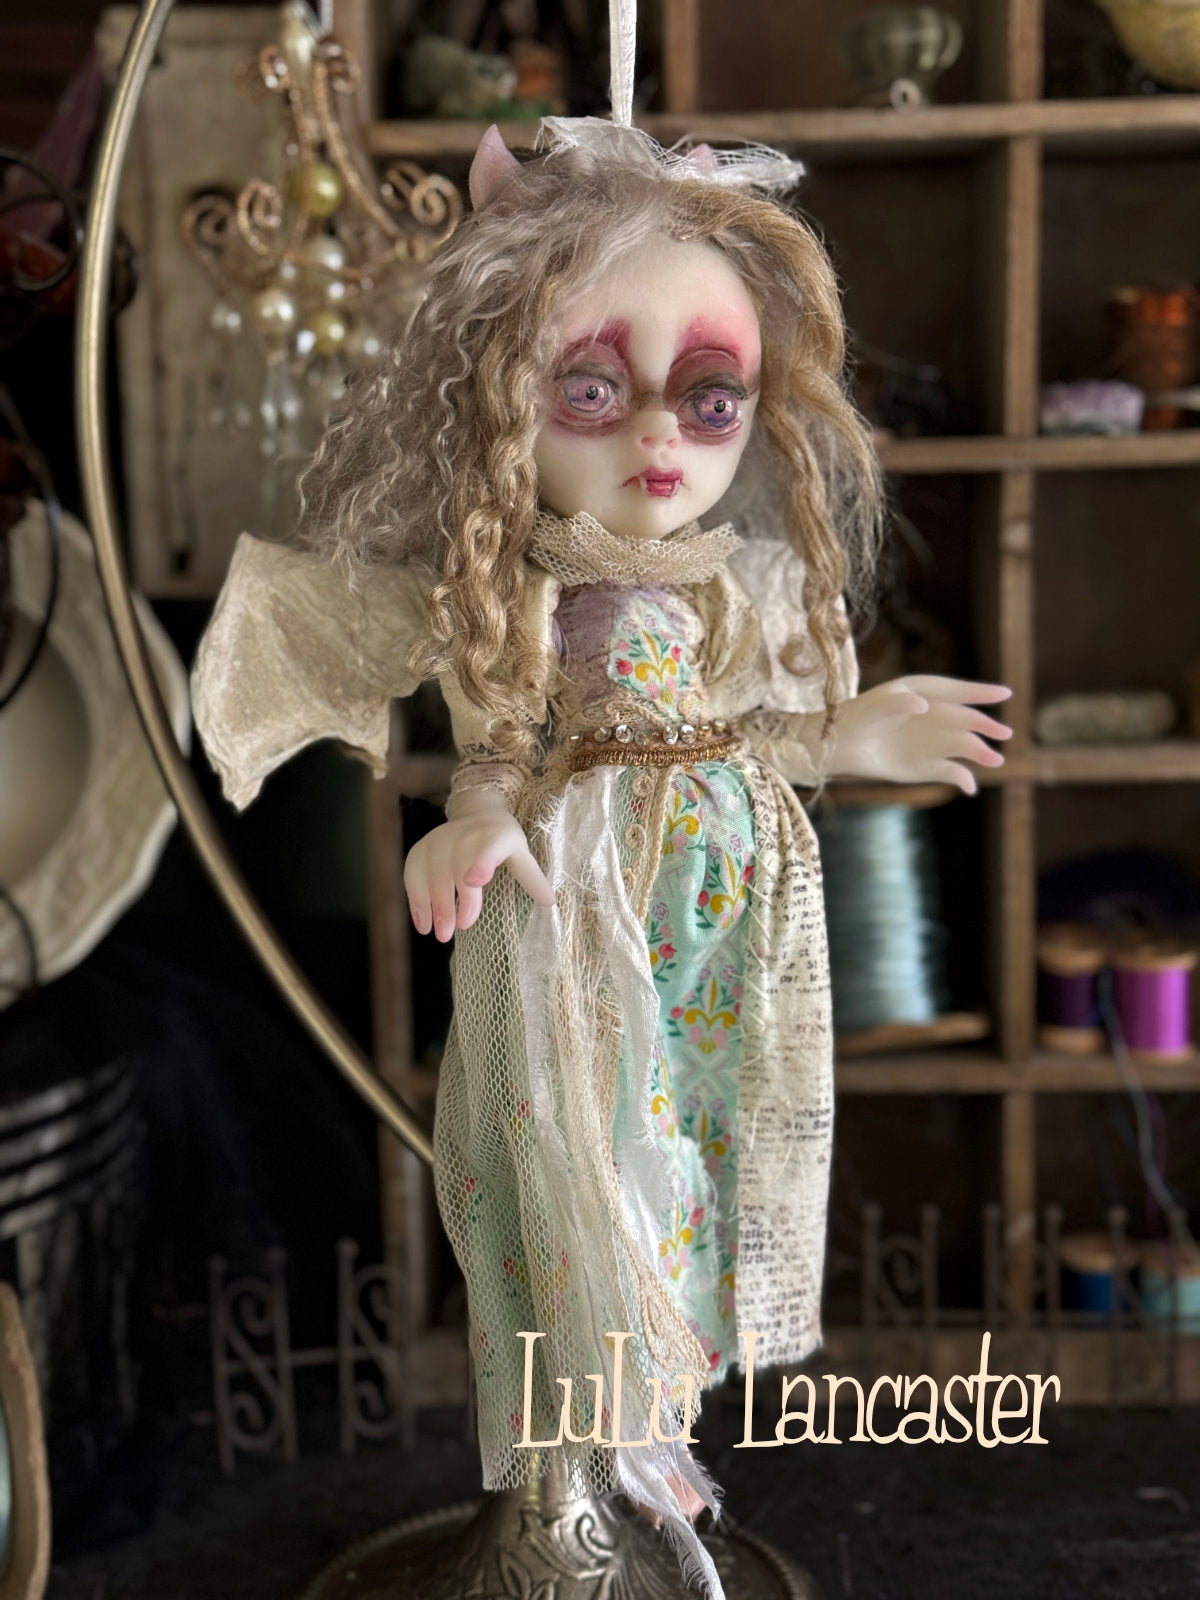 Dragana Vampire Bat hanging Original LuLu Lancaster Art Doll